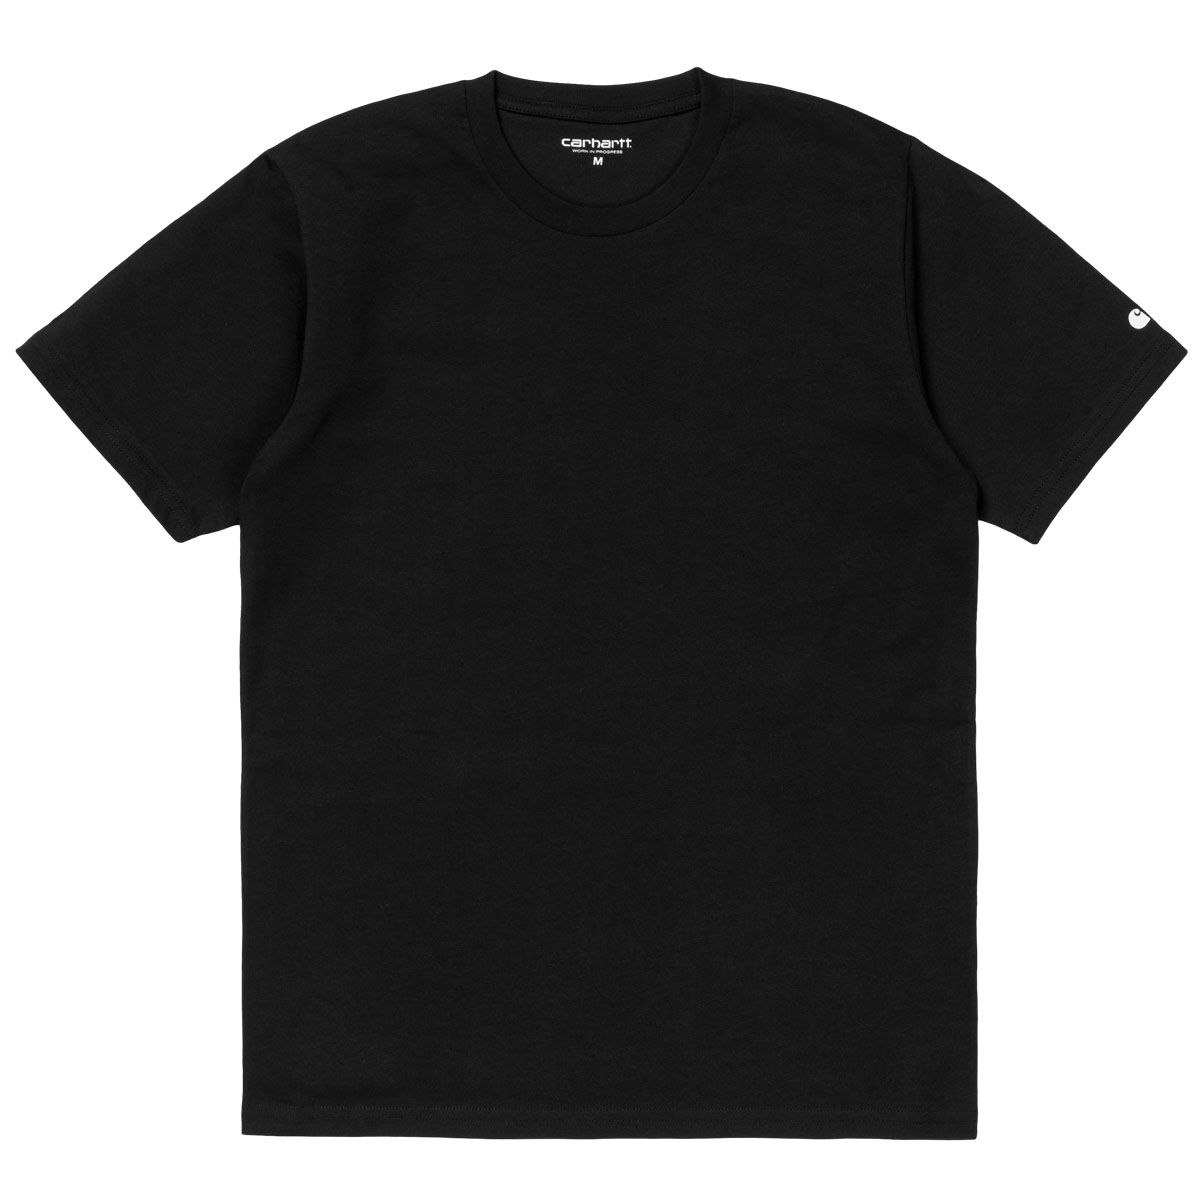 S/S Base T-Shirt (Black / White)